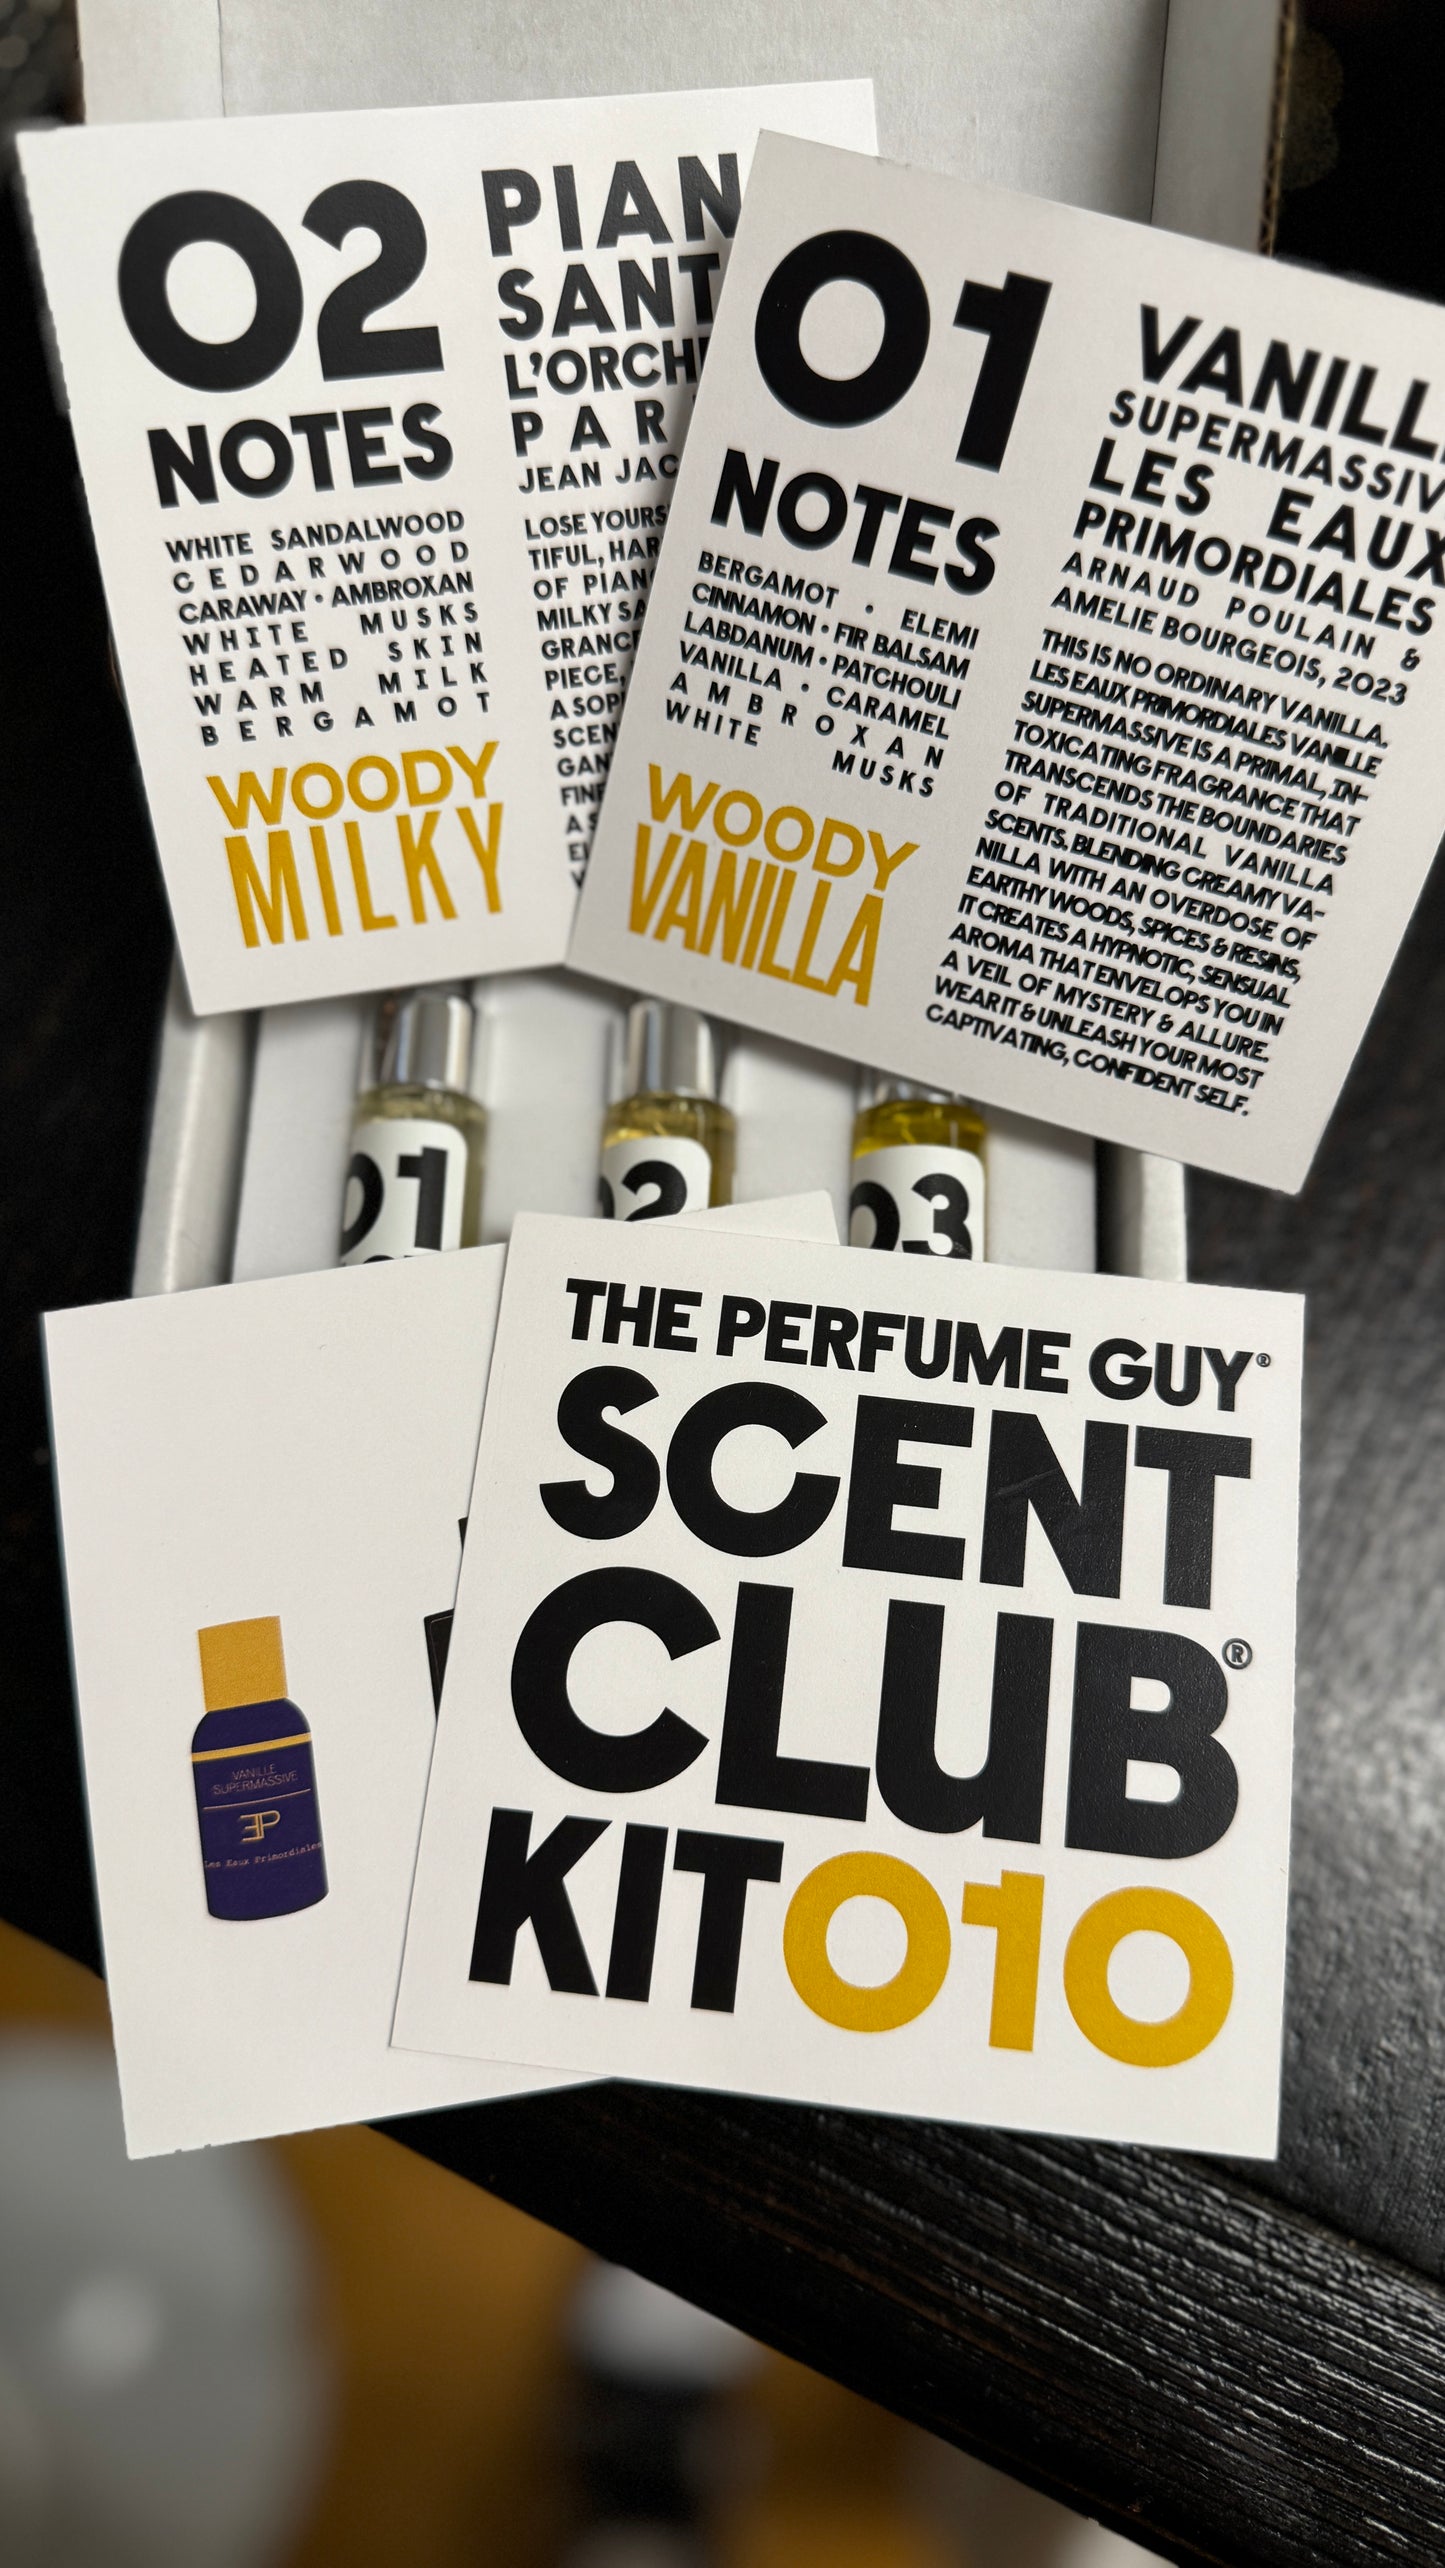 ScentClub Kit #010